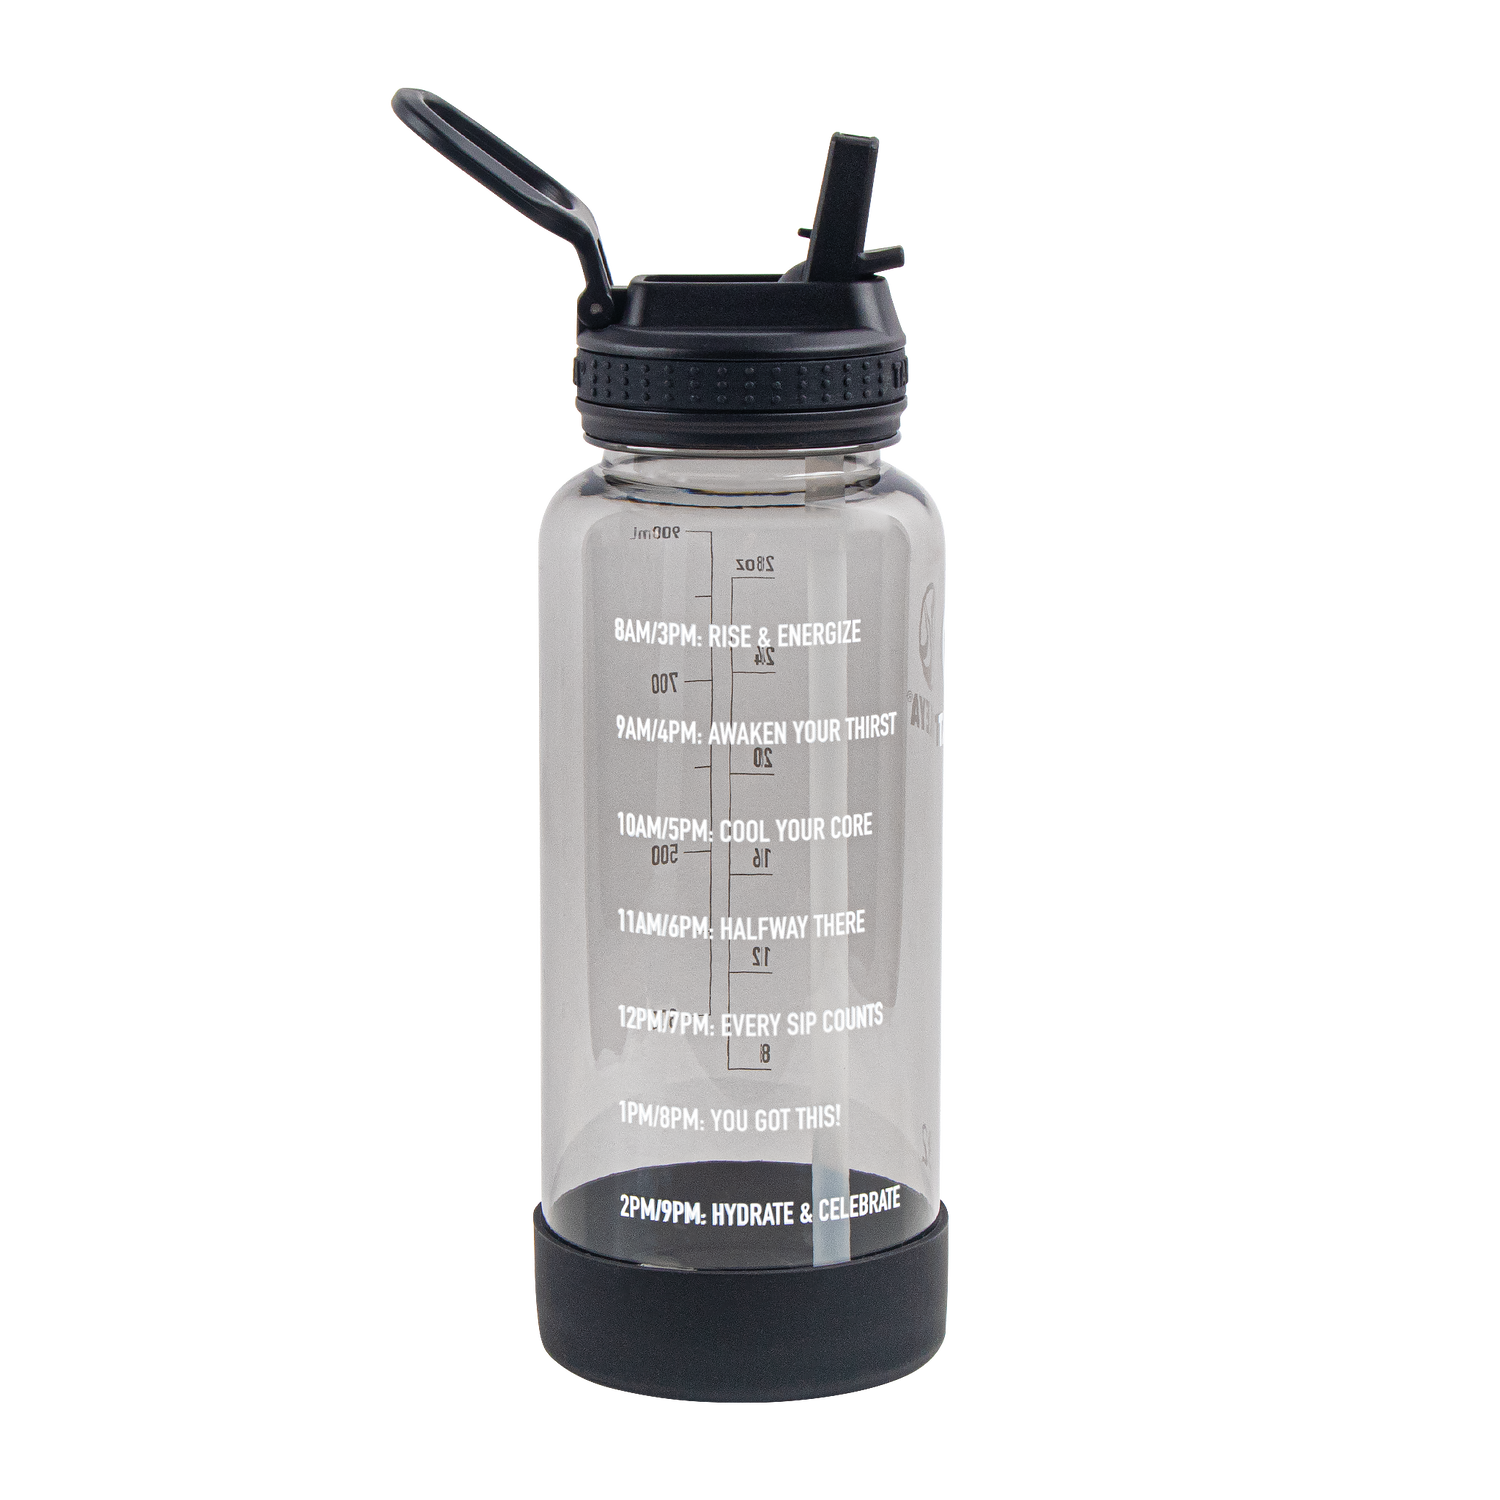 Just Funky 32oz. Plastic Water Bottle